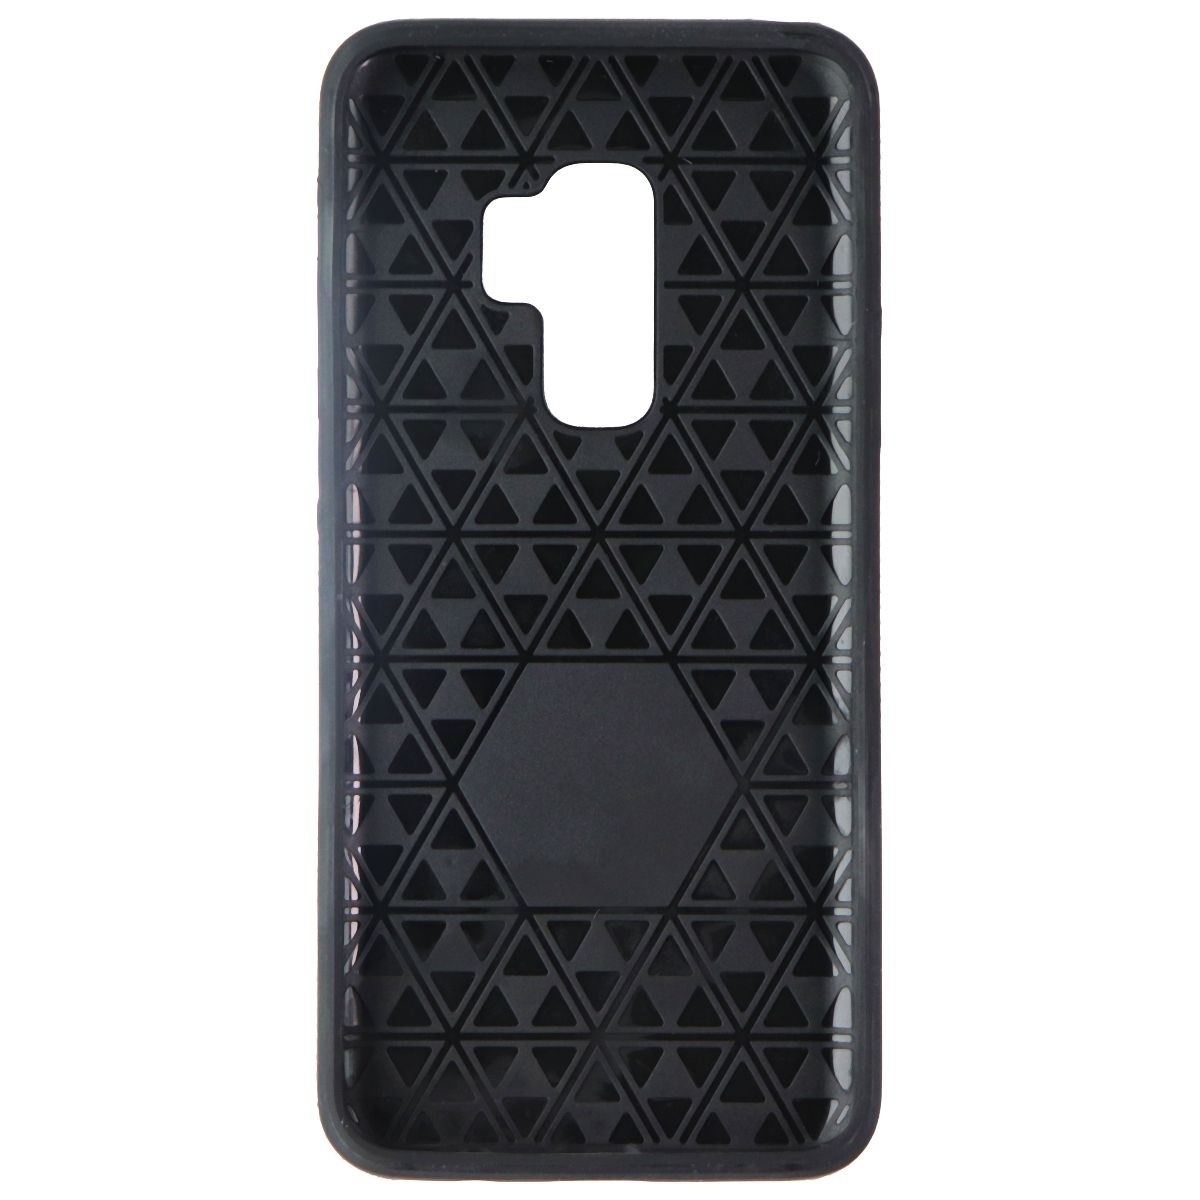 Nimbus9 Latitude Series Case For Samsung Galaxy S9 Plus - Textured Gold/Black